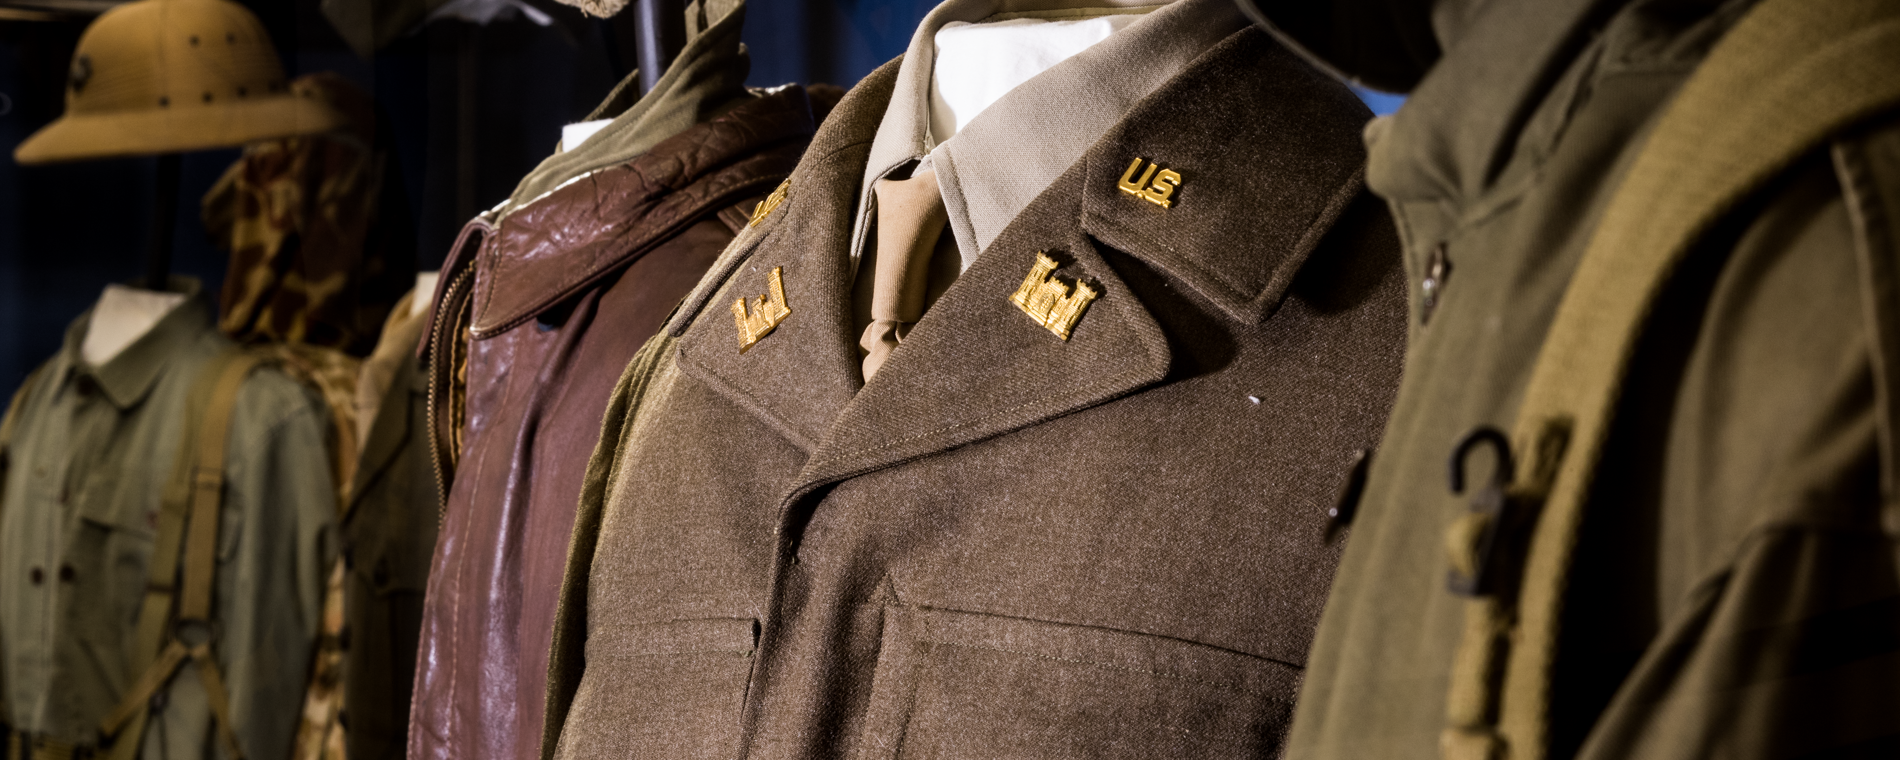 World War II Military Uniforms on Exhibit